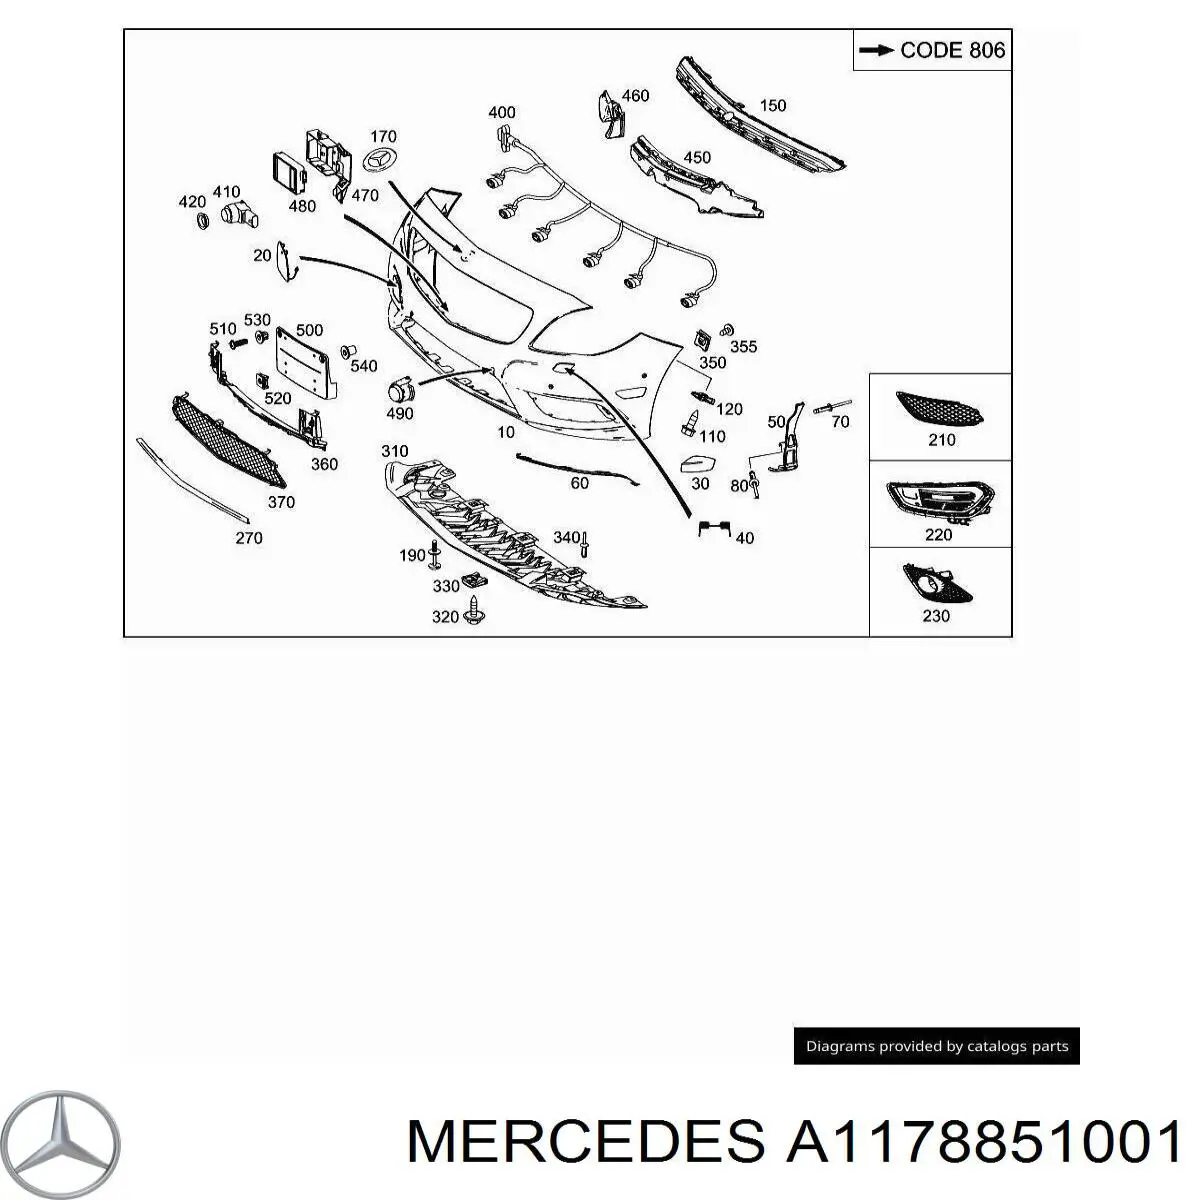 A1178851001 Mercedes